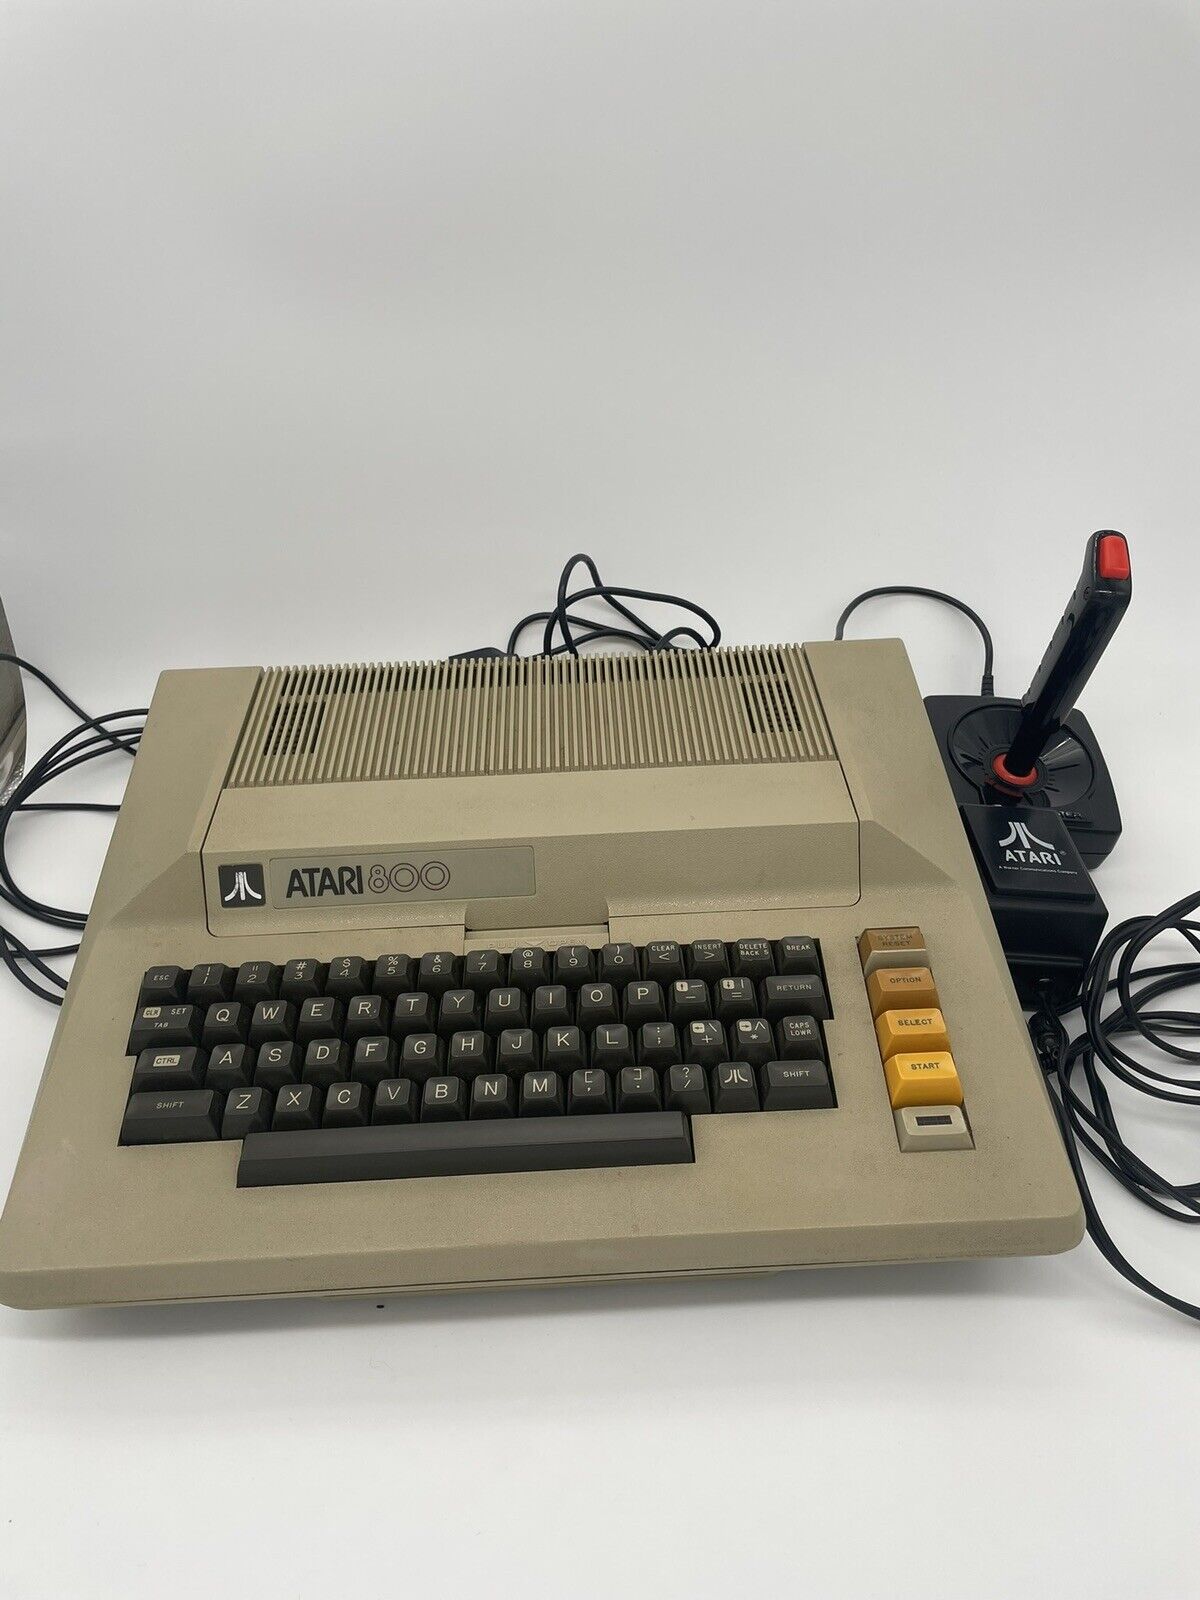 Atari 800 Computer Console Bundle Tested 7 Games + BASIC Program & Manuals